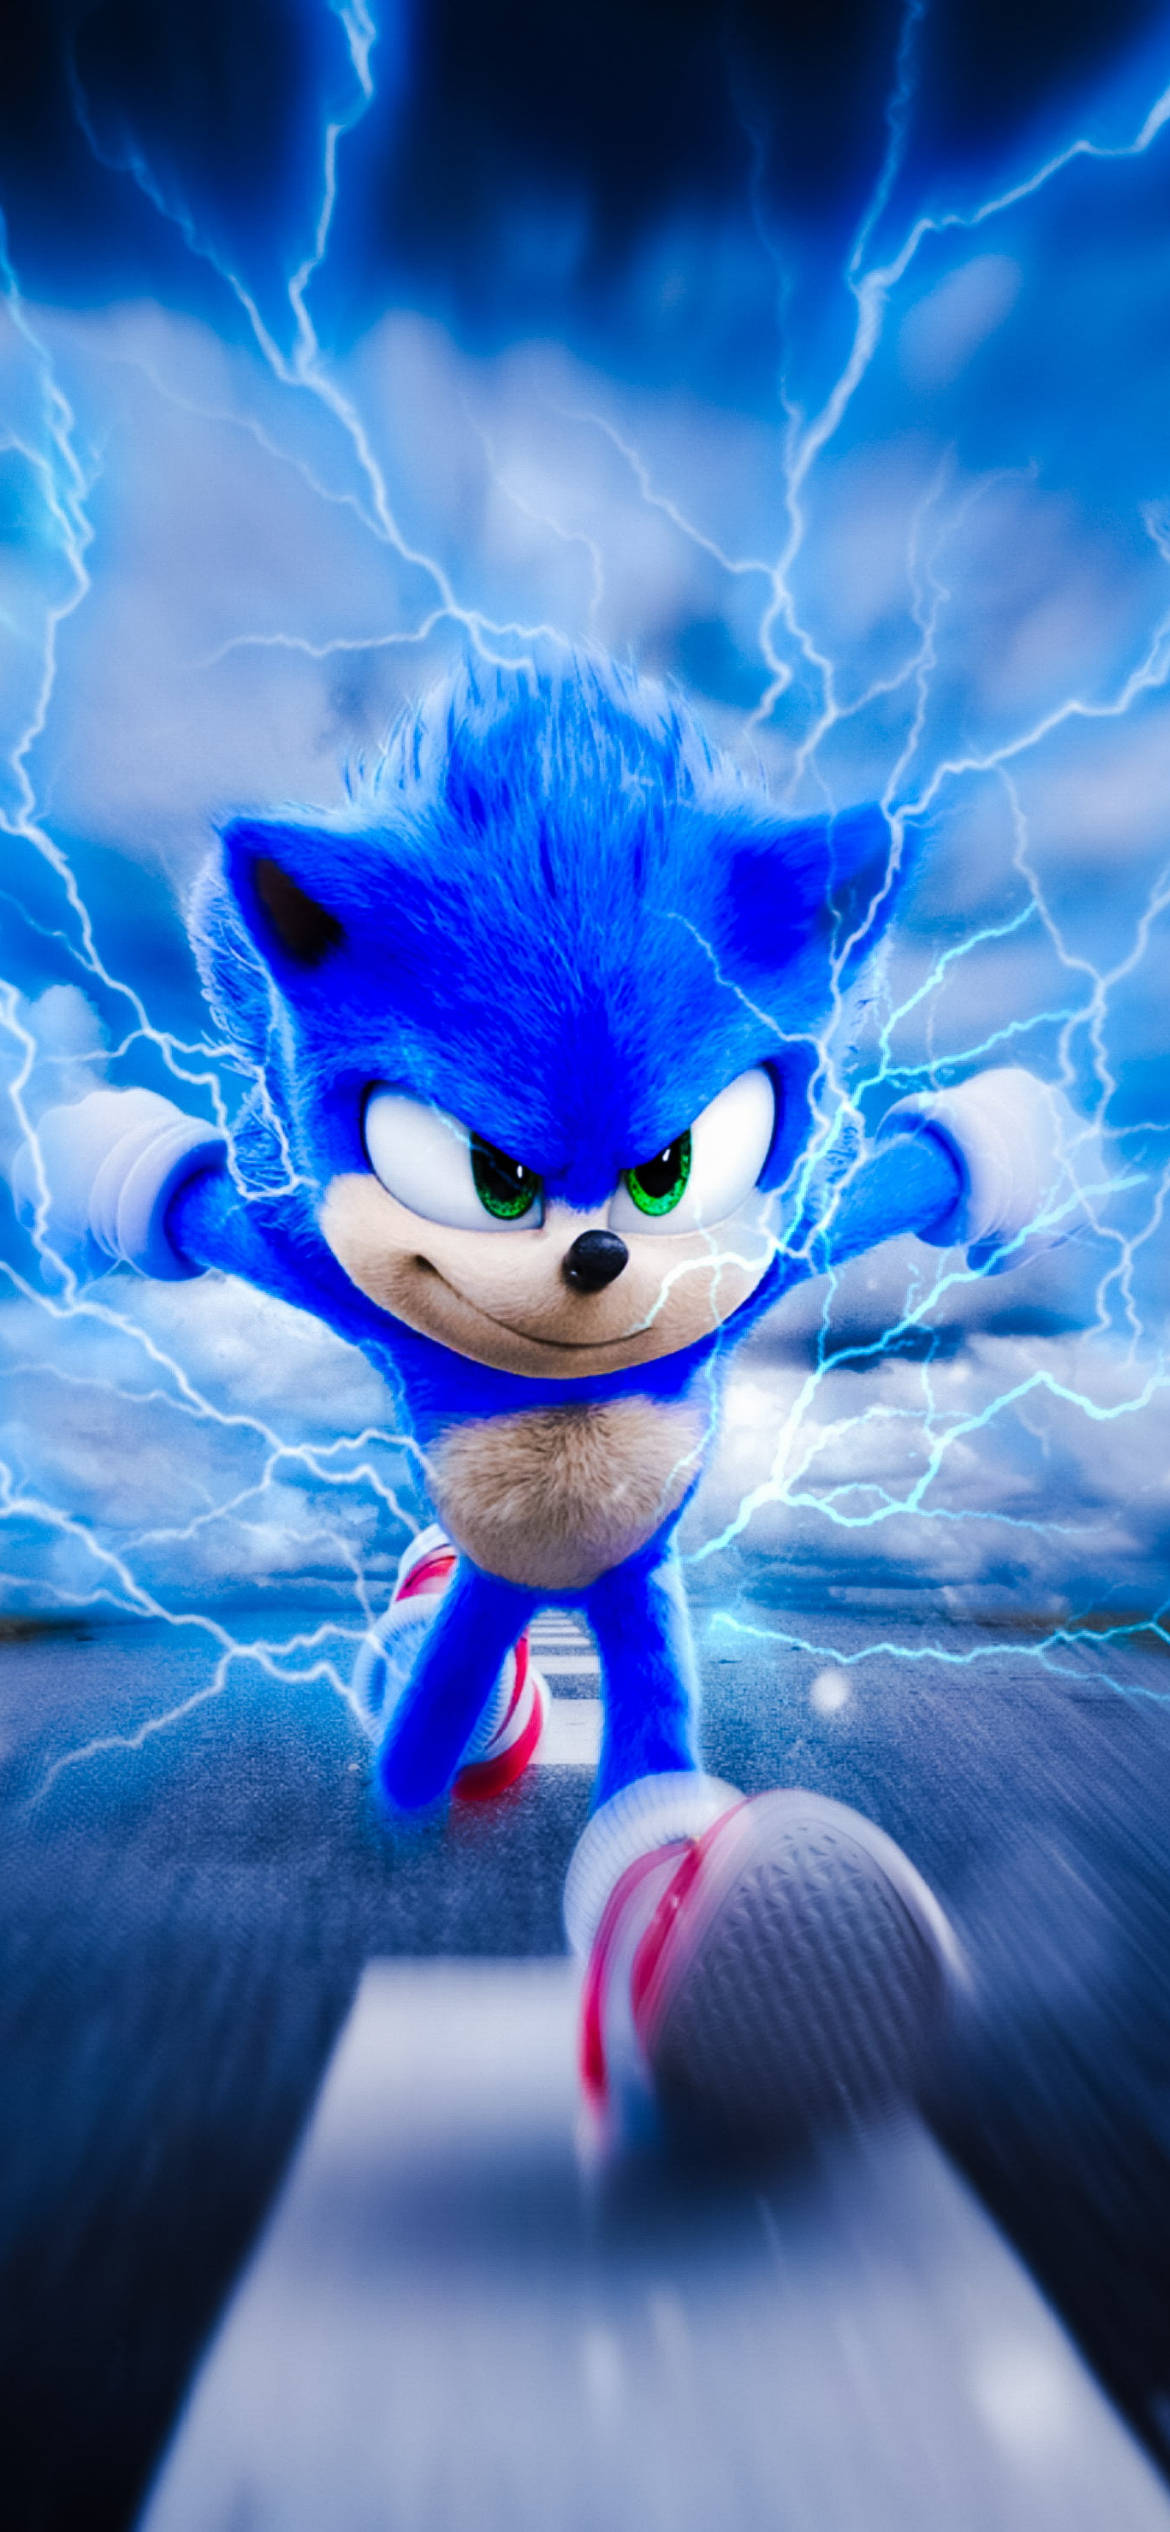 Download Sonic The Hedgehog Speed iPhone Wallpaper | Wallpapers.com